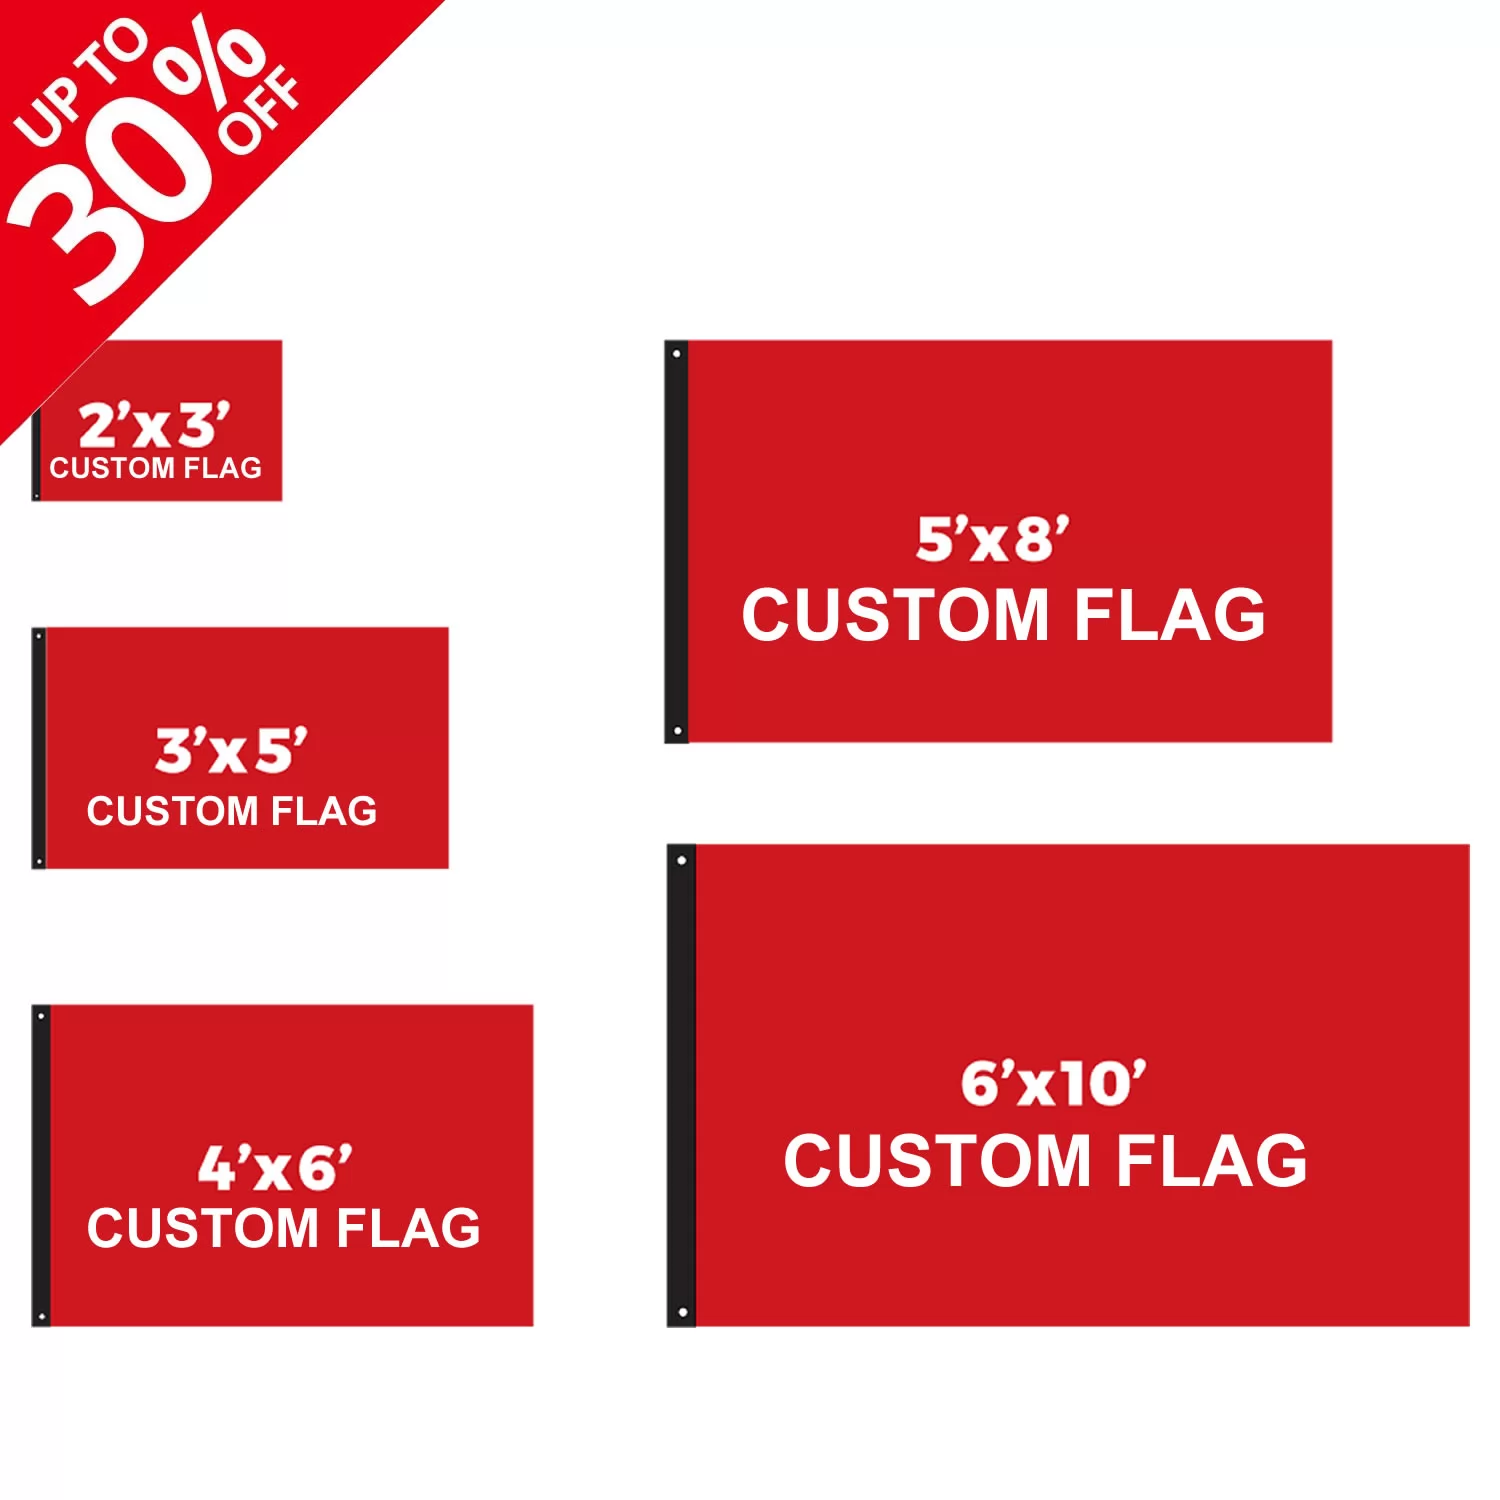 Custom Standard Flags